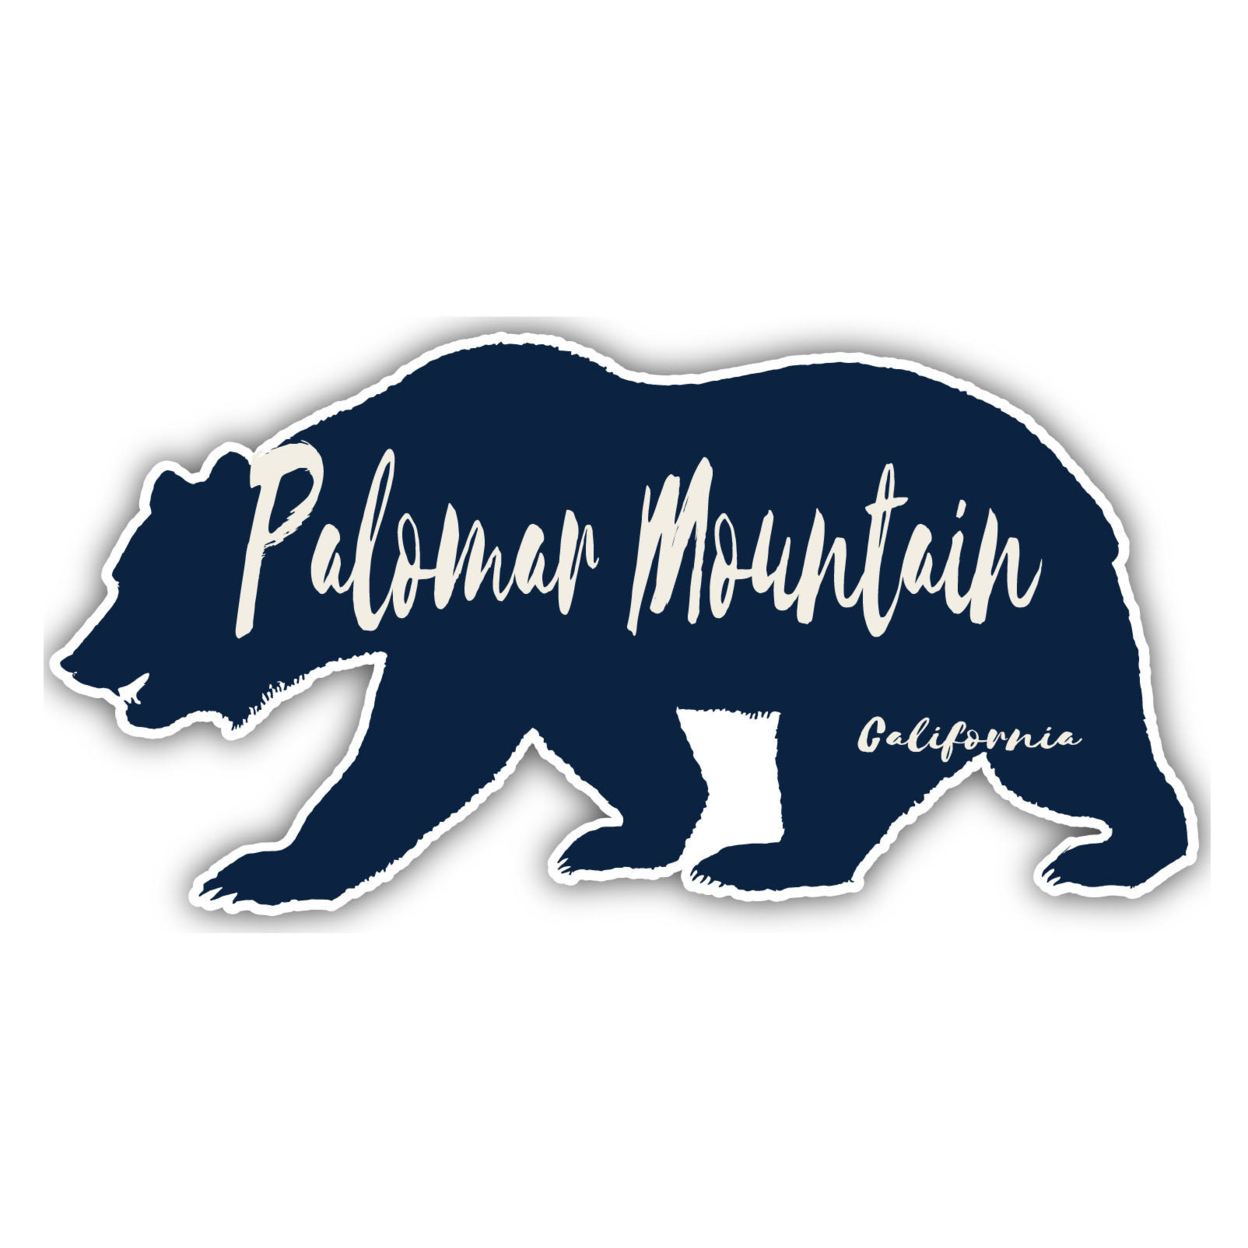 Palomar Mountain California Souvenir Decorative Stickers (Choose Theme And Size) - Single Unit, 4-Inch, Camp Life